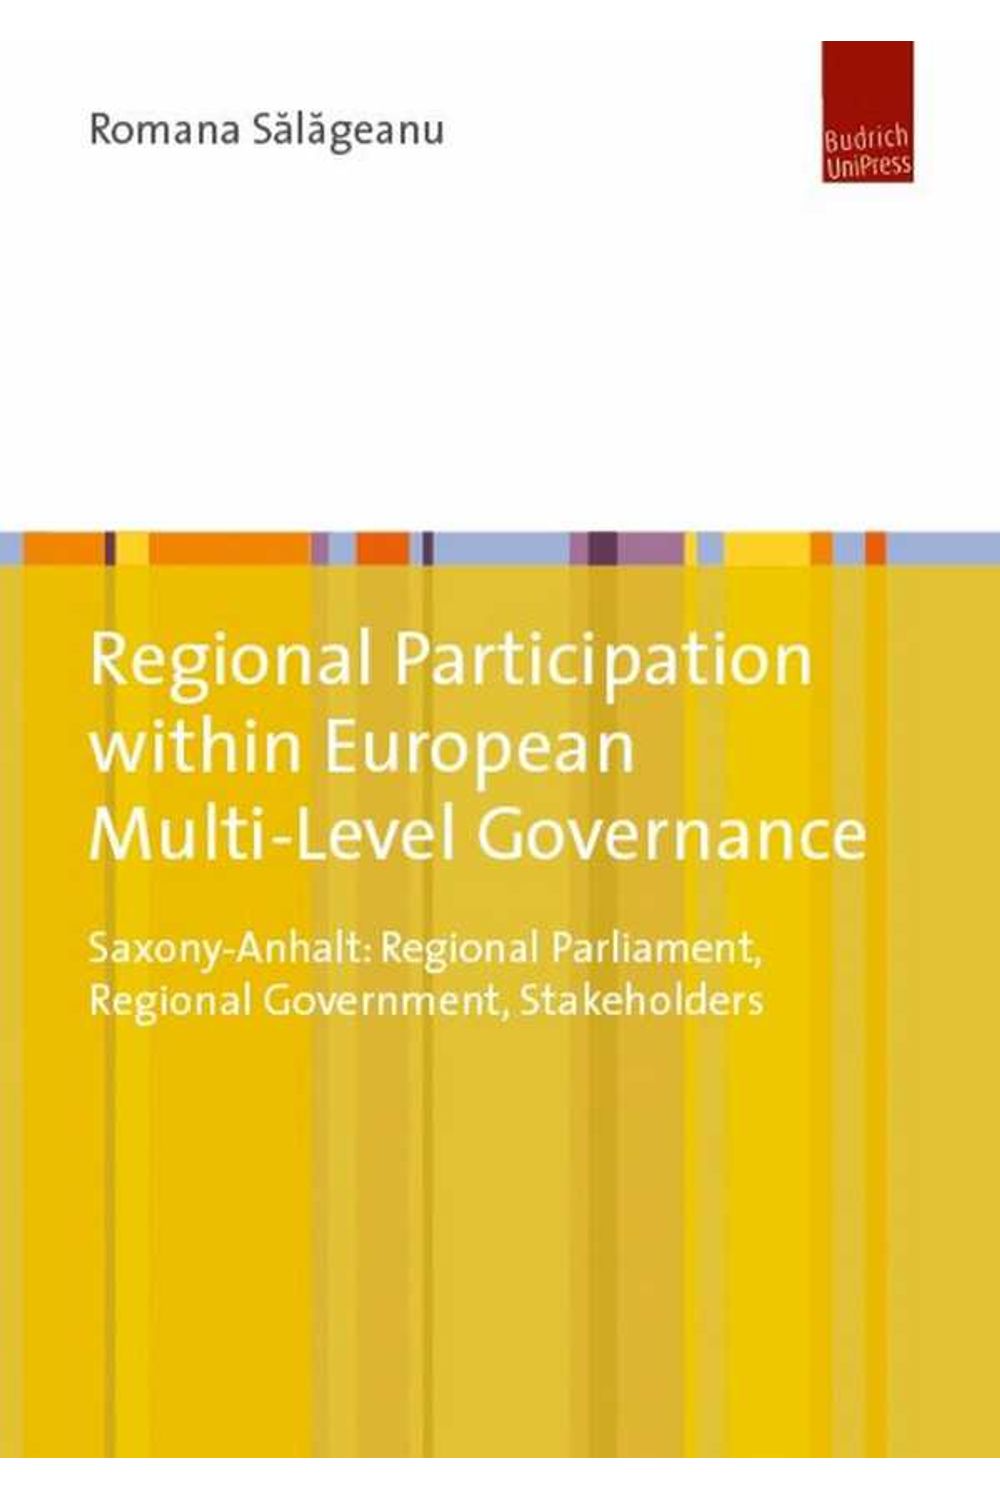 bw-regional-participation-within-european-multilevel-governance-budrich-unipress-9783863883027